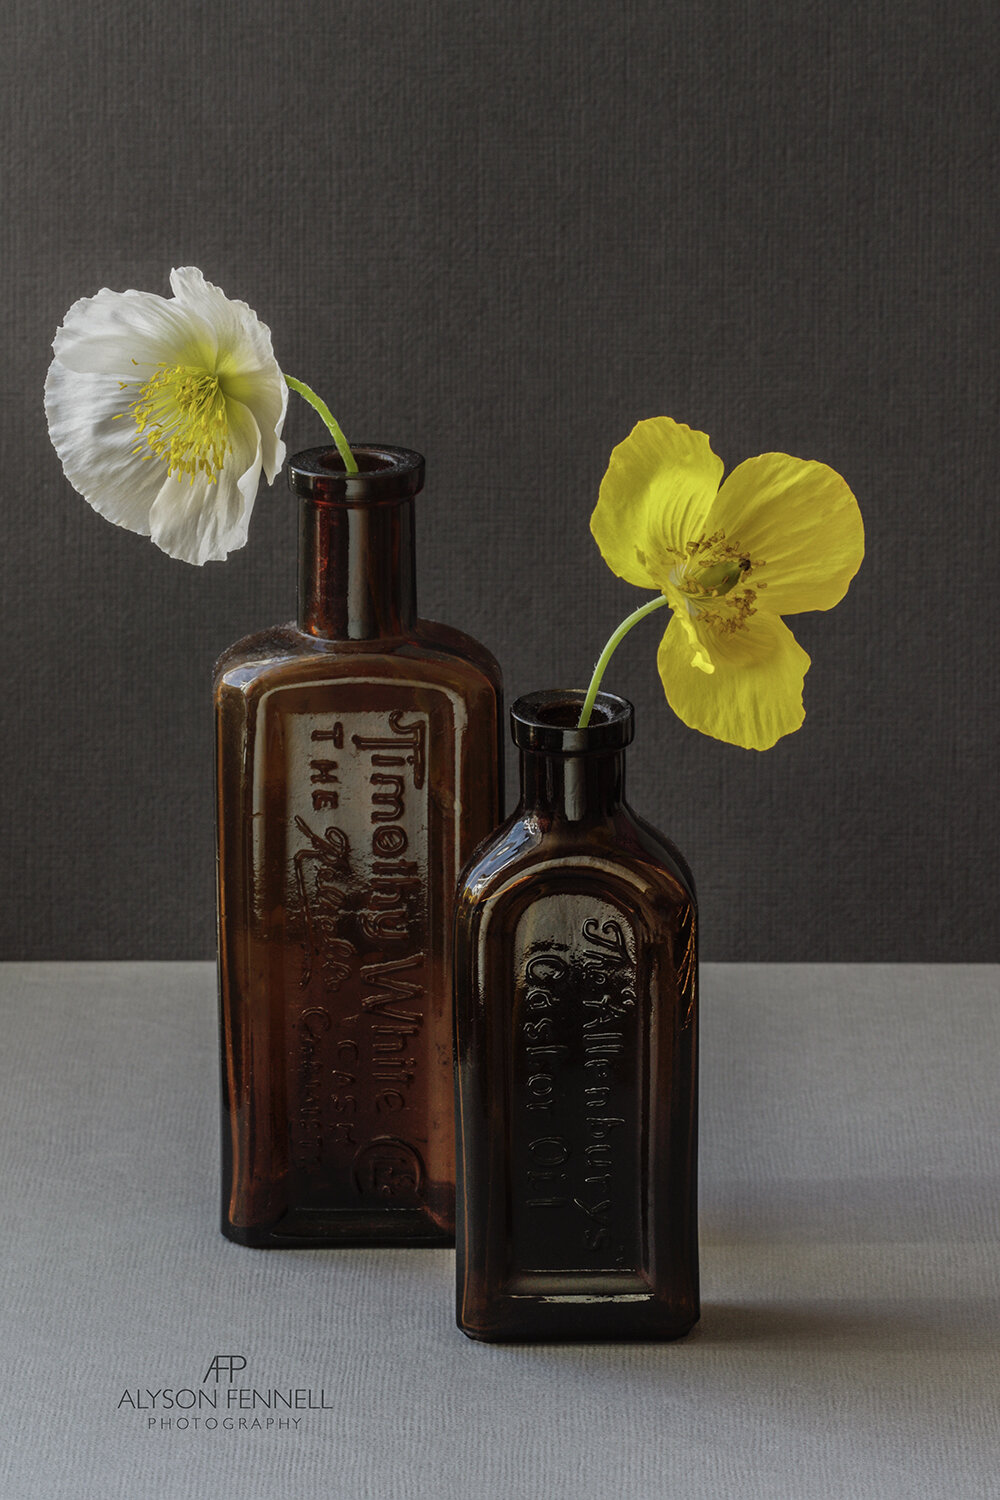 Icelandic and Welsh Poppy in Antique Medicine Bottles